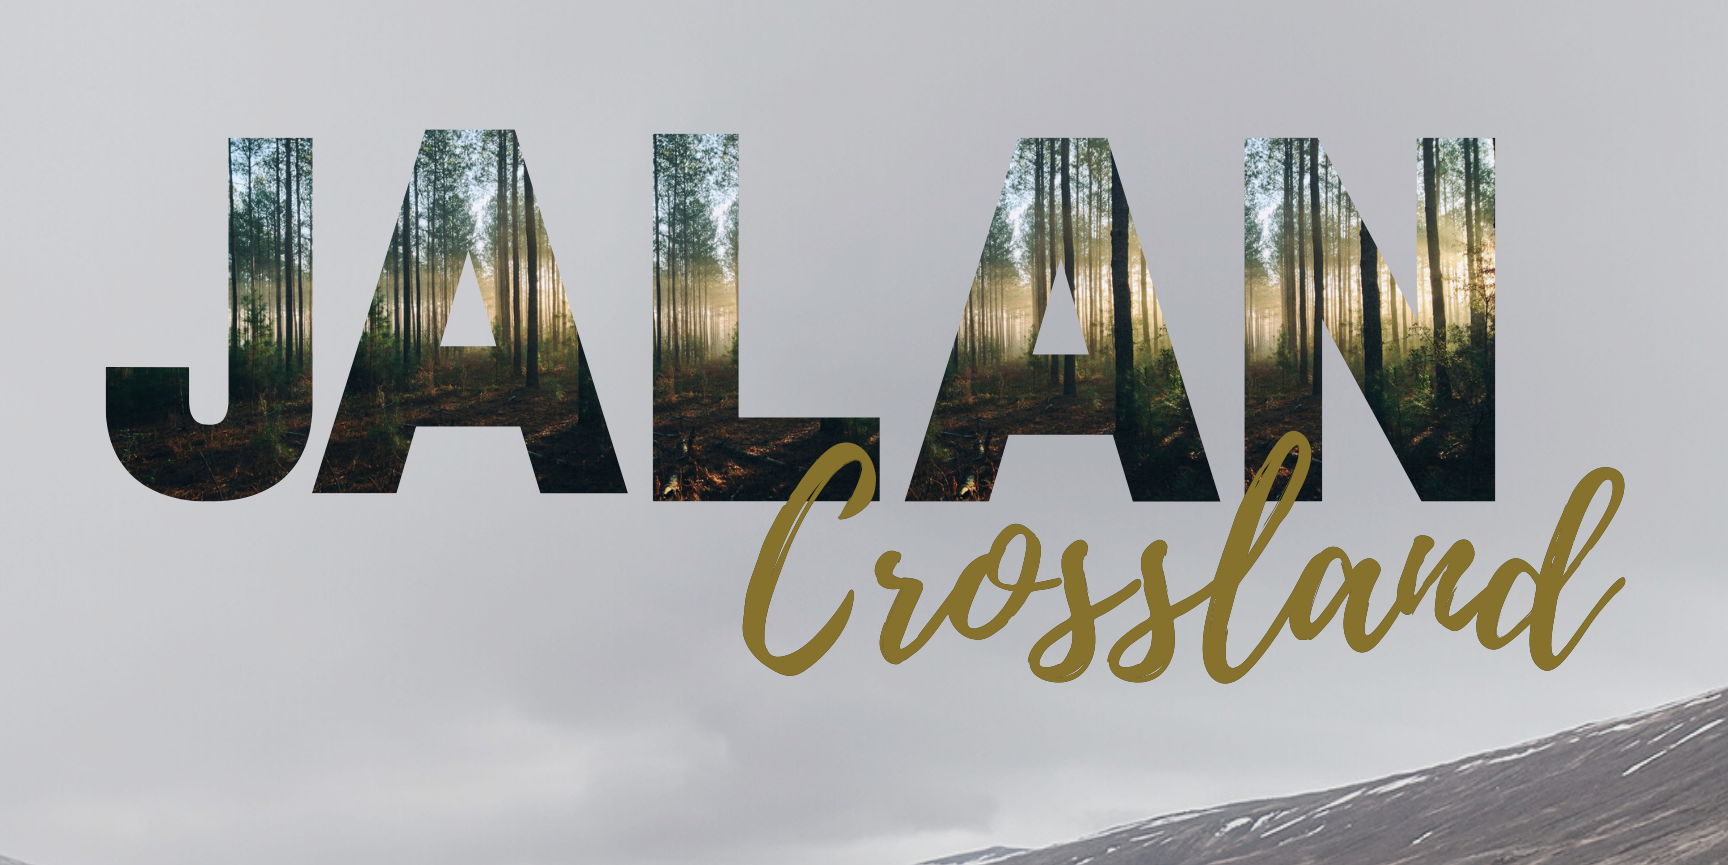 Jalan Crossland promotional image